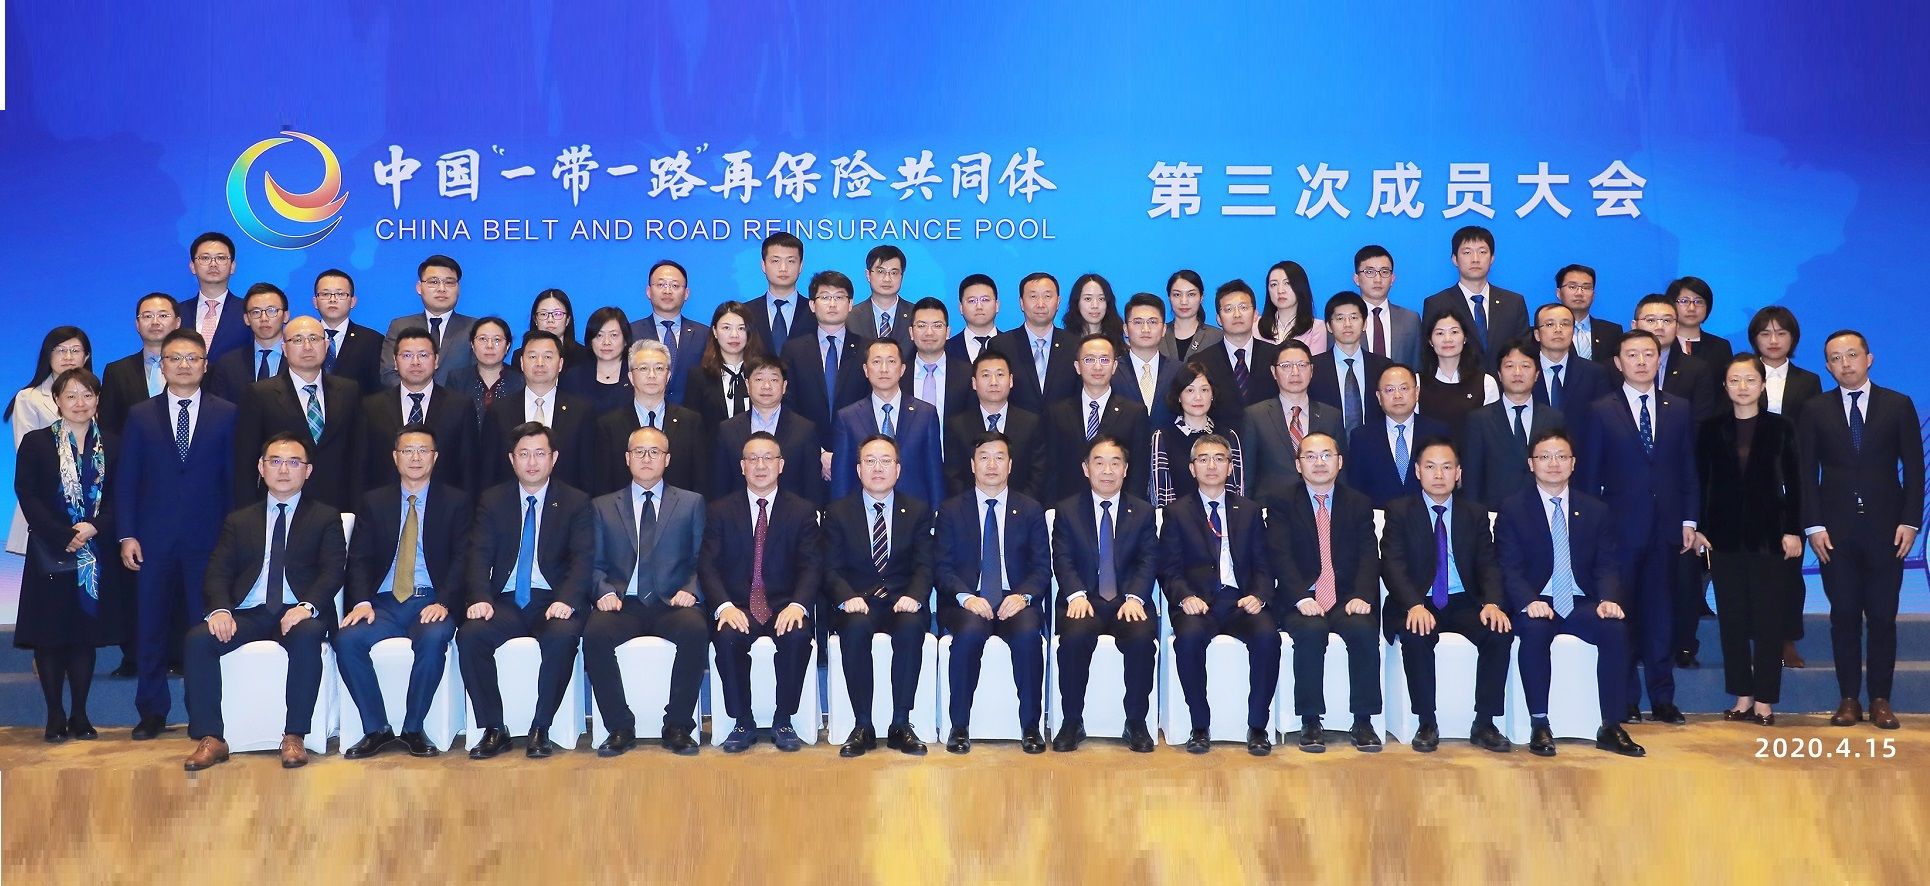 Third members’ meeting of the China Belt and Road Reinsurance Pool was held in Beijing